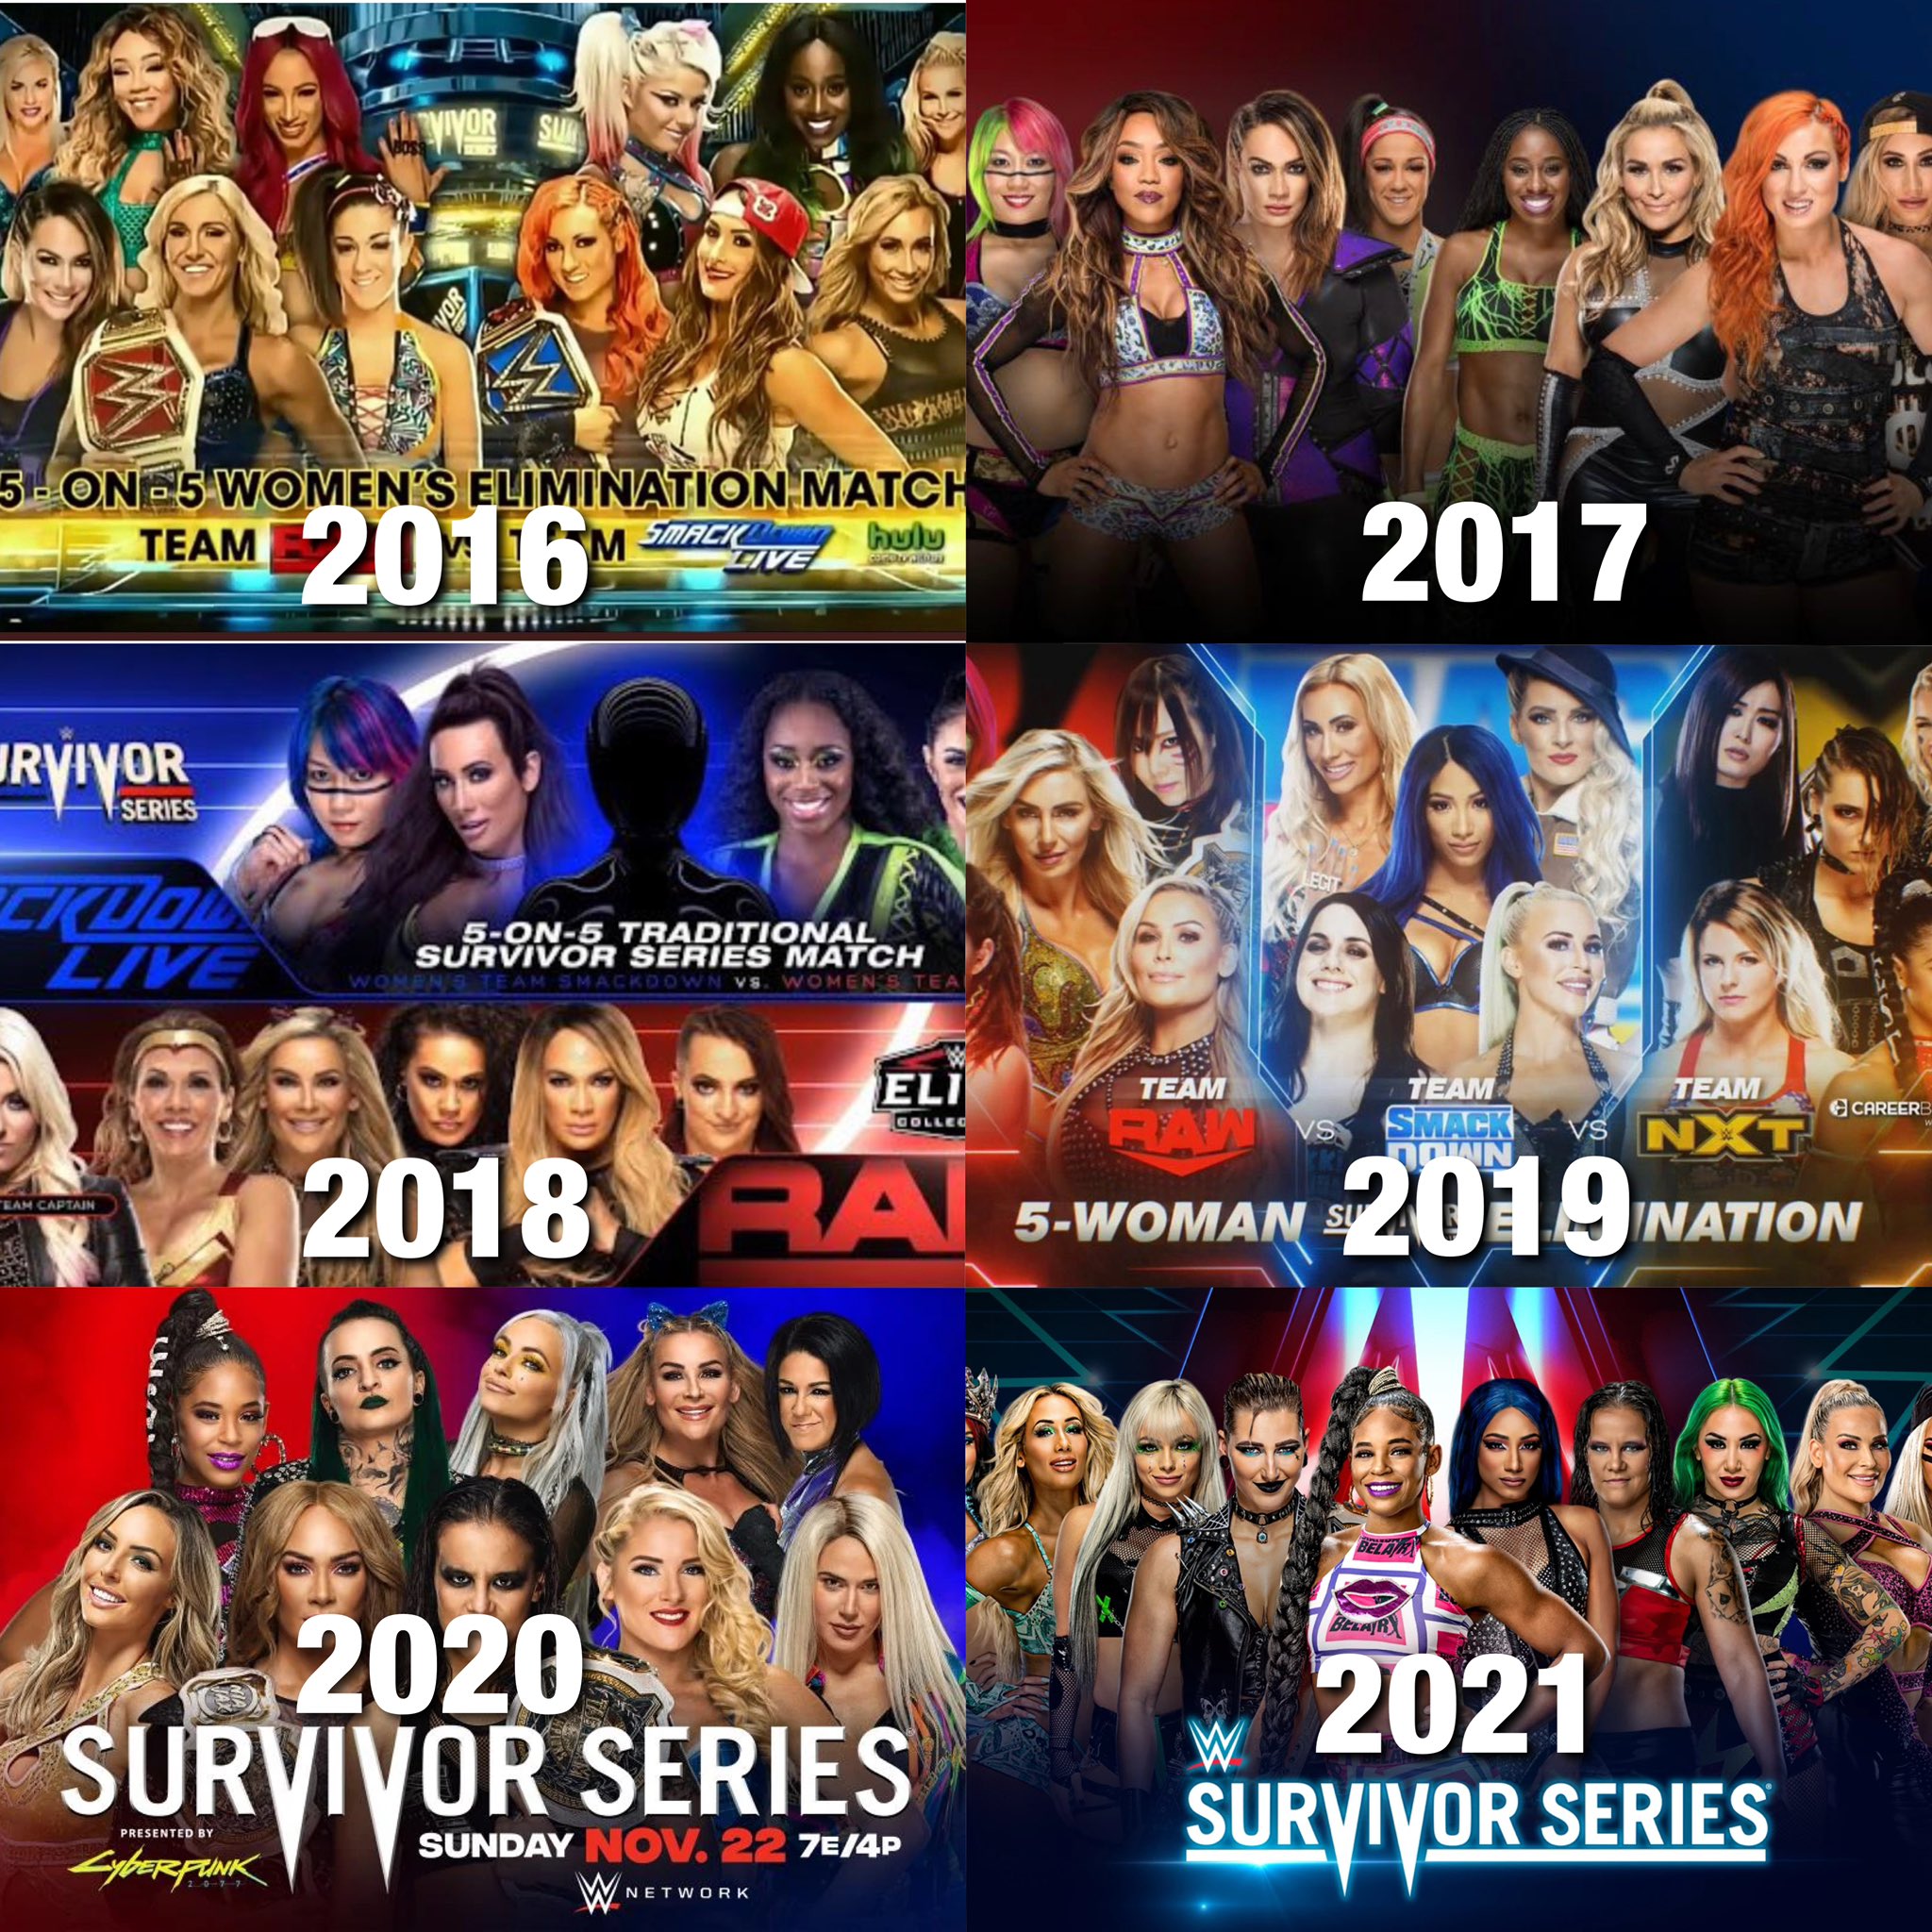 Every Survivor season ranked